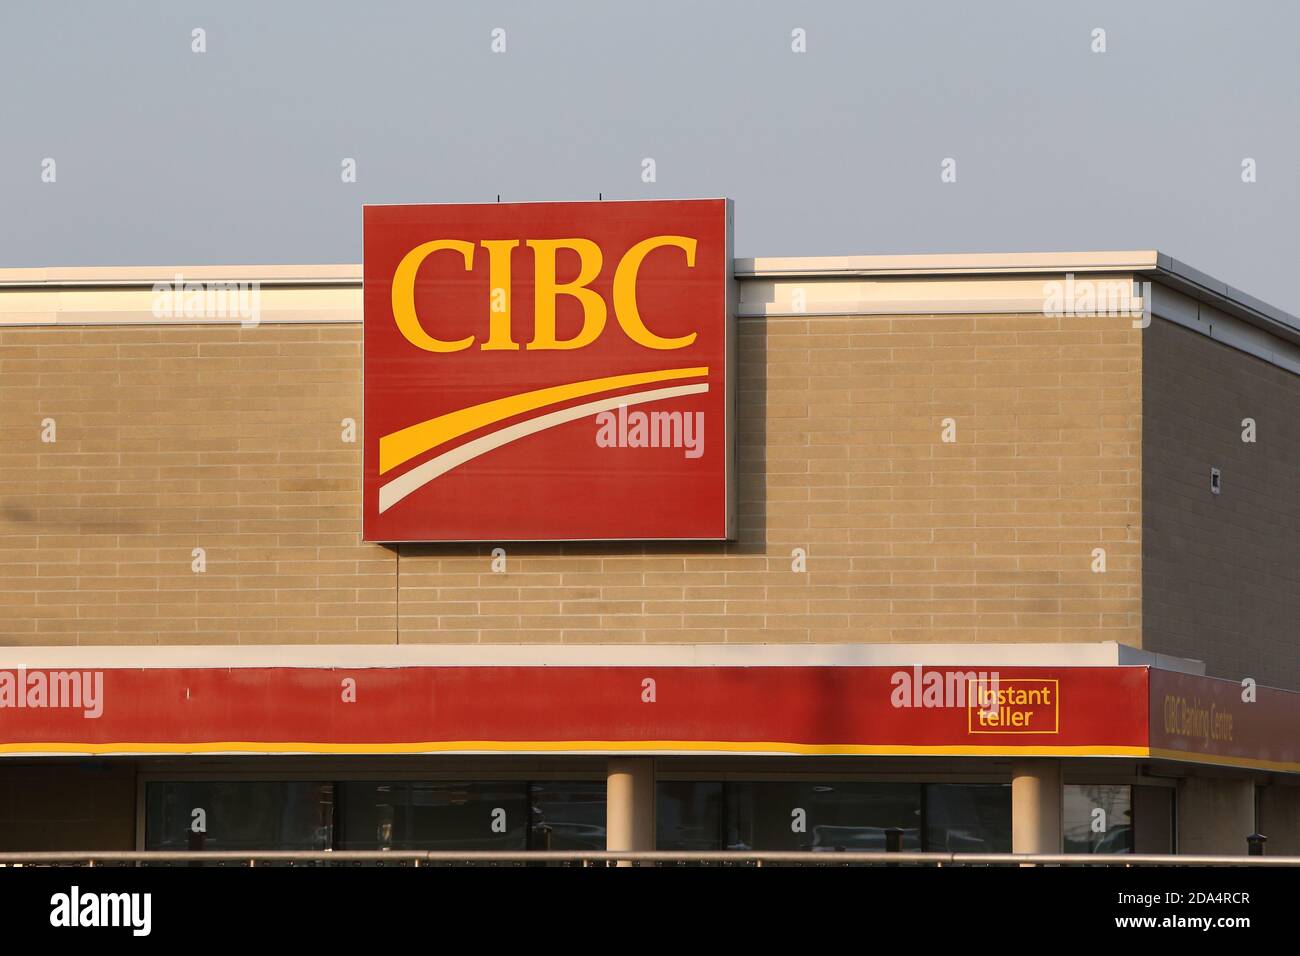 CIBC bank Sign. London Ontario Canada. Luke Durda/Alamy Stock Photo